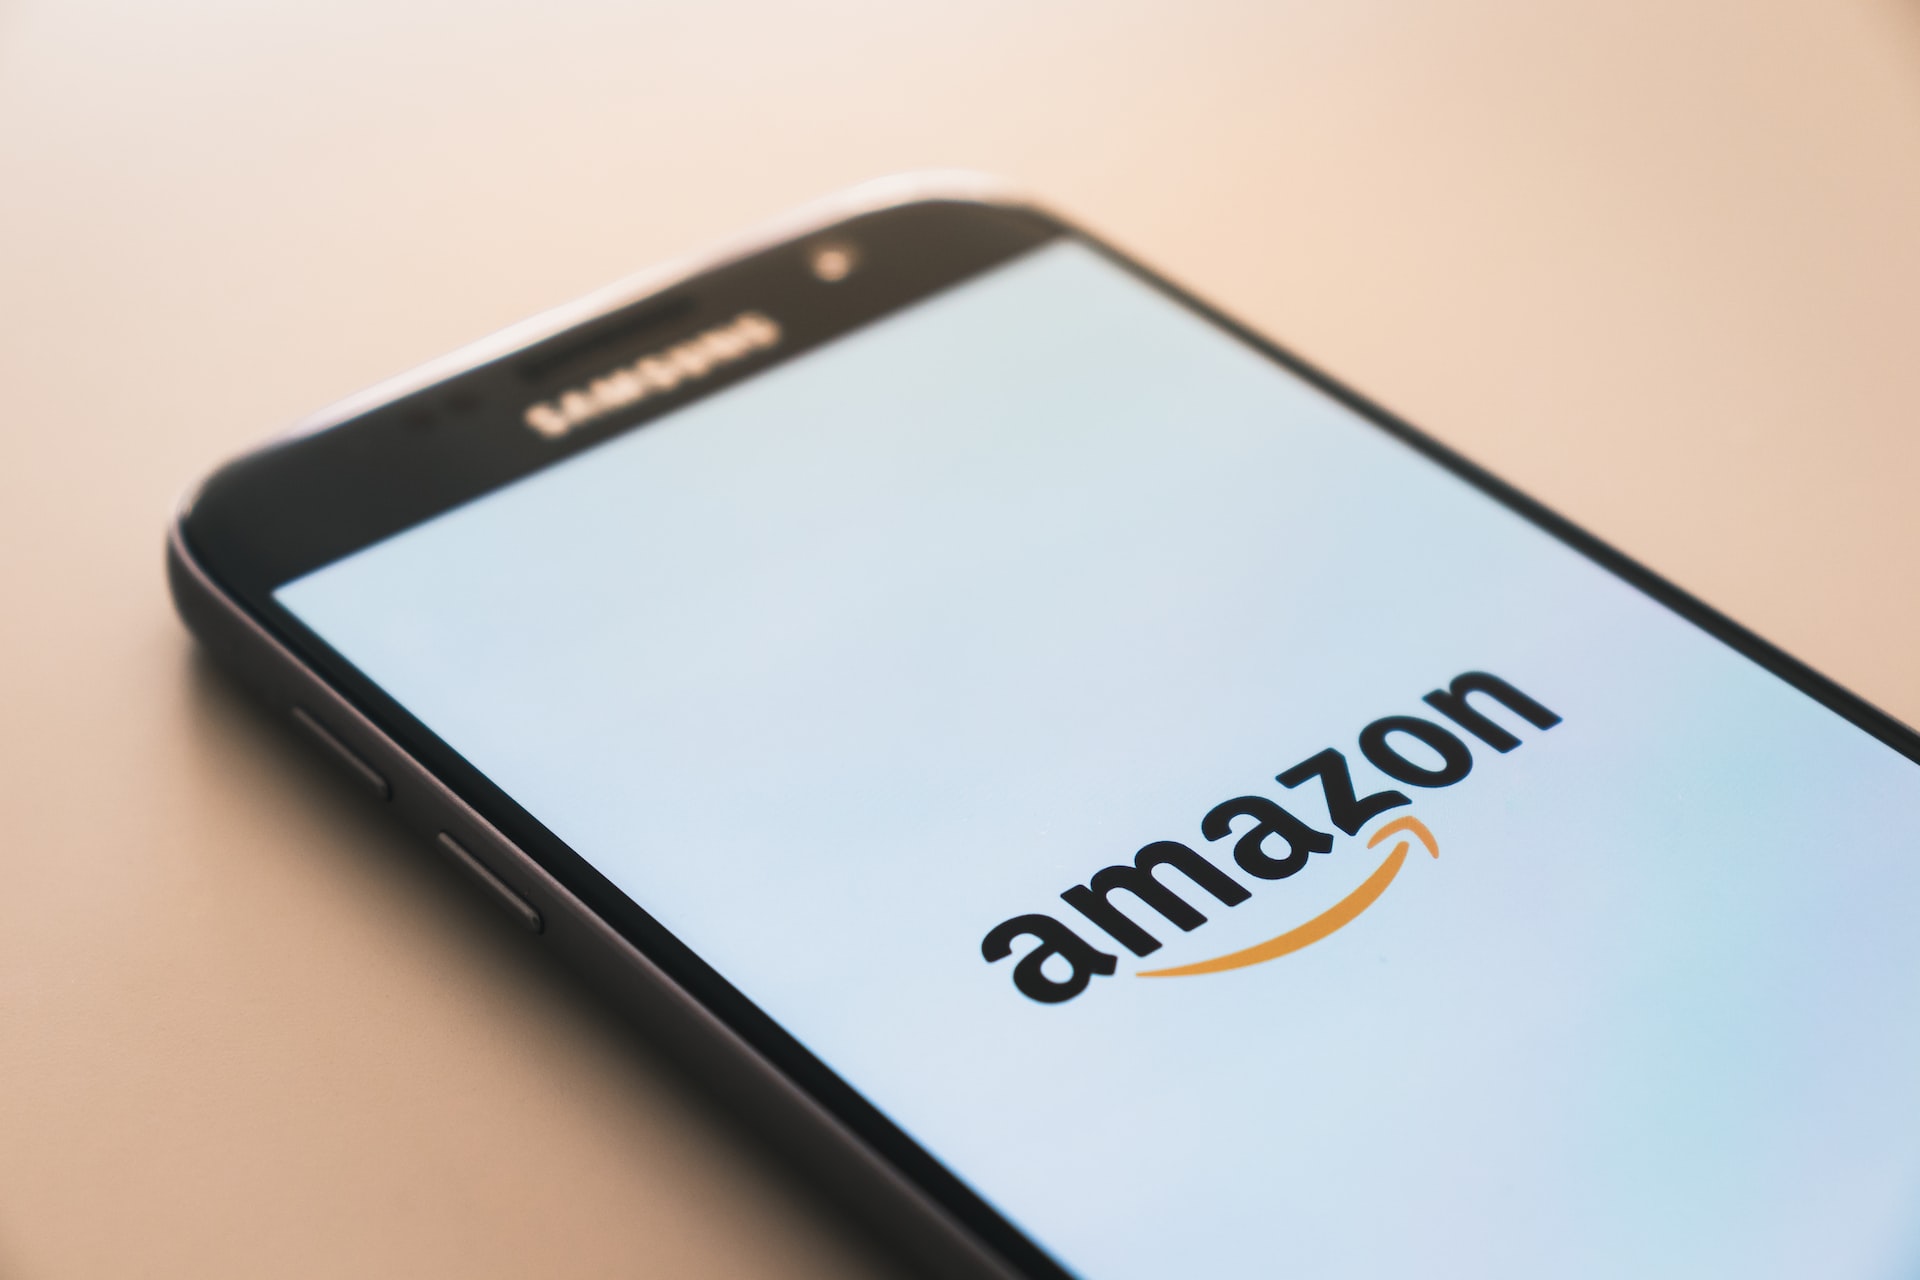 Amazon Product Listing and Optimization